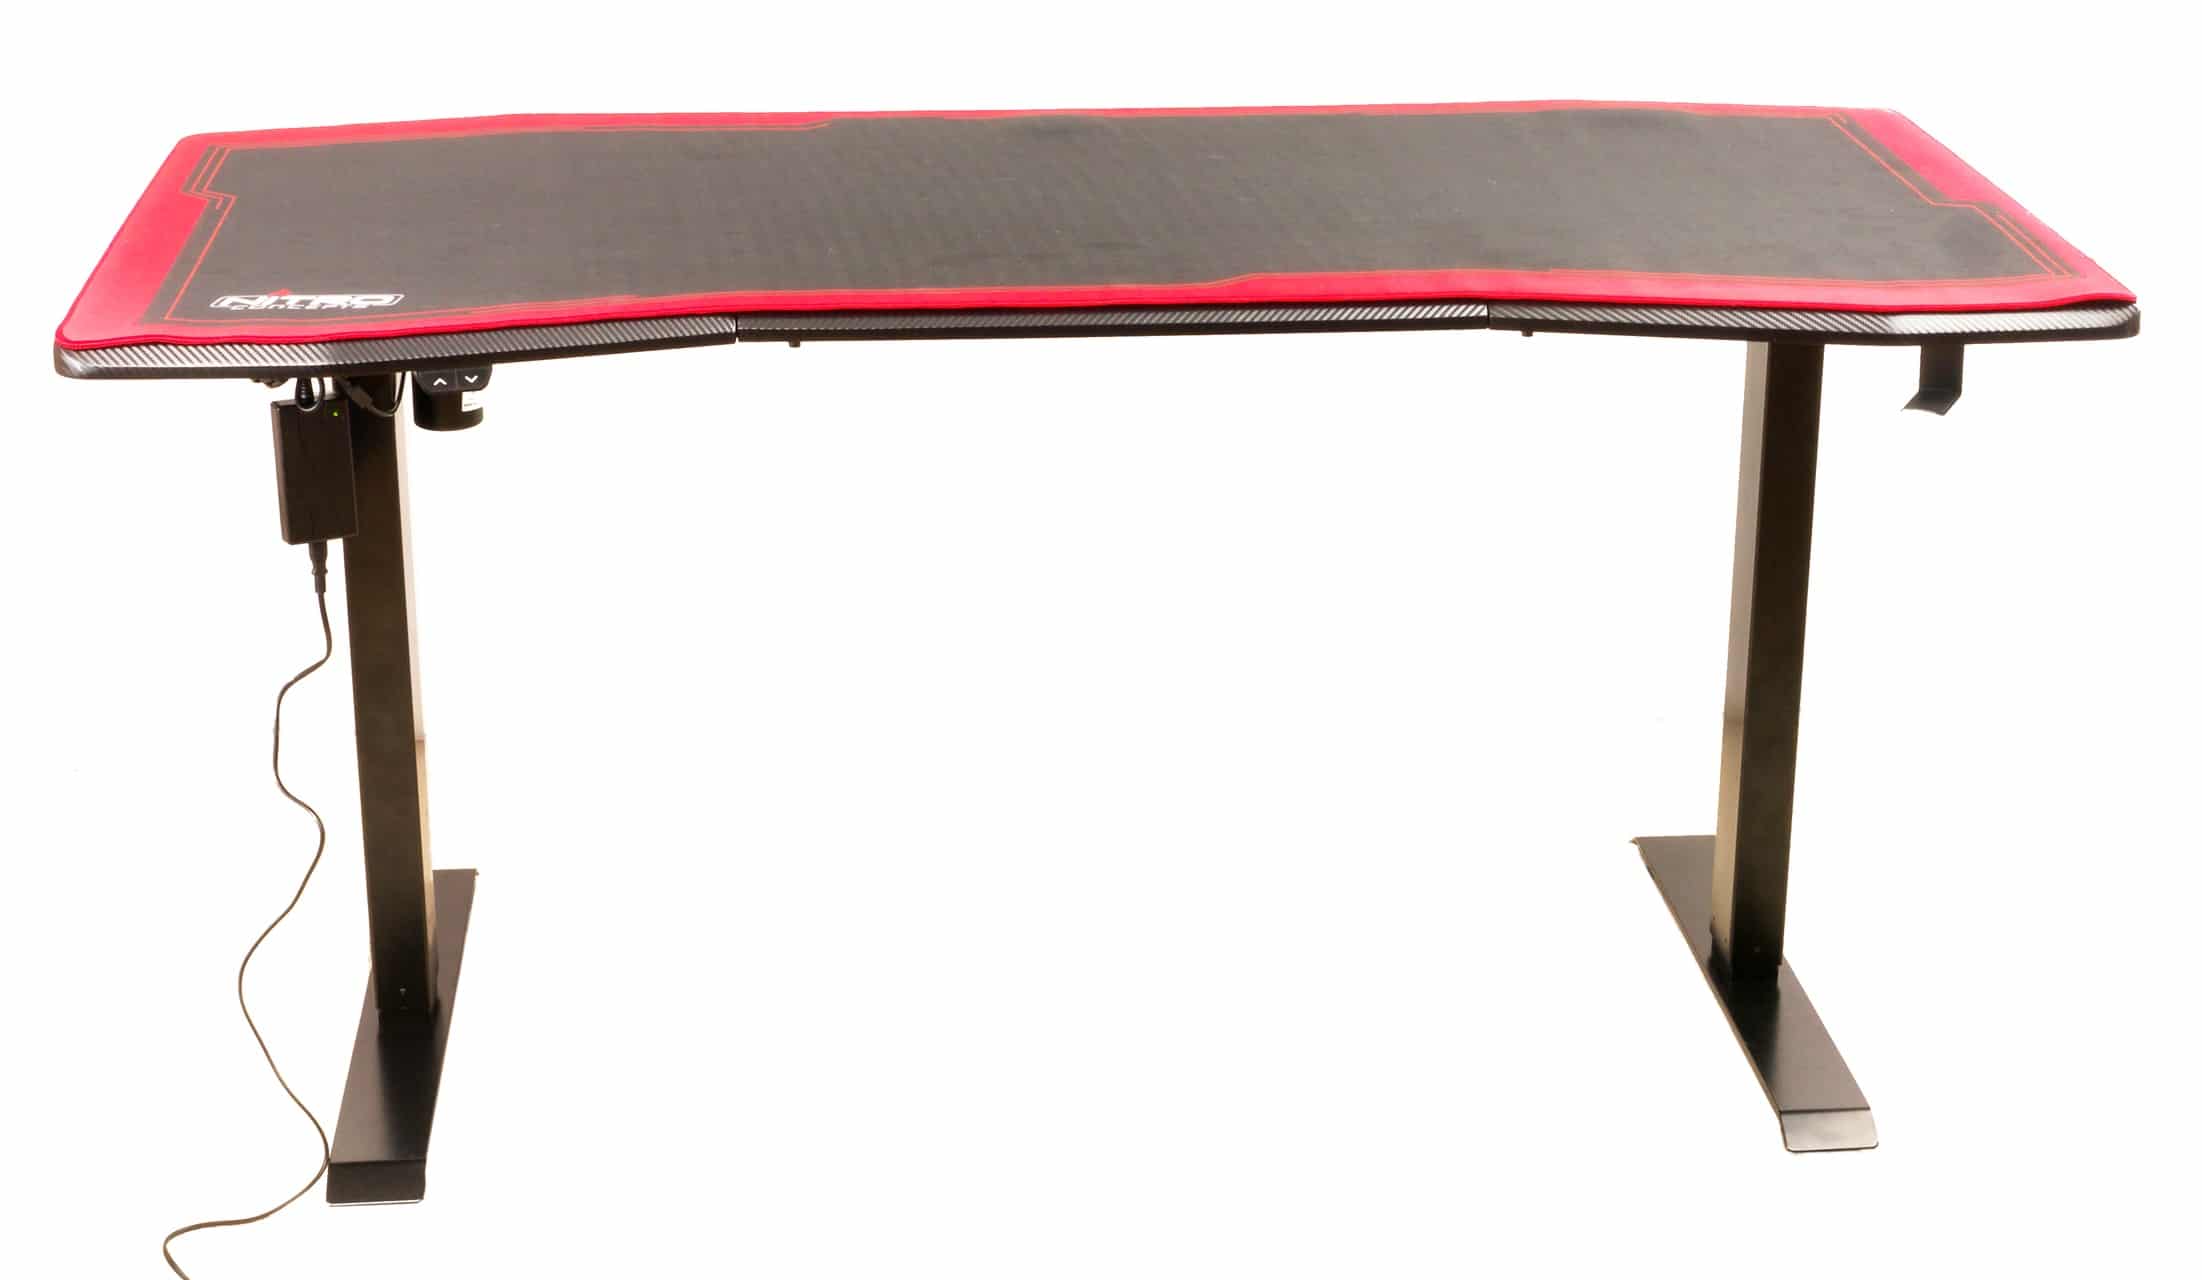 Nitro Concepts D16e Height Adjustable Gaming Desk Under Test